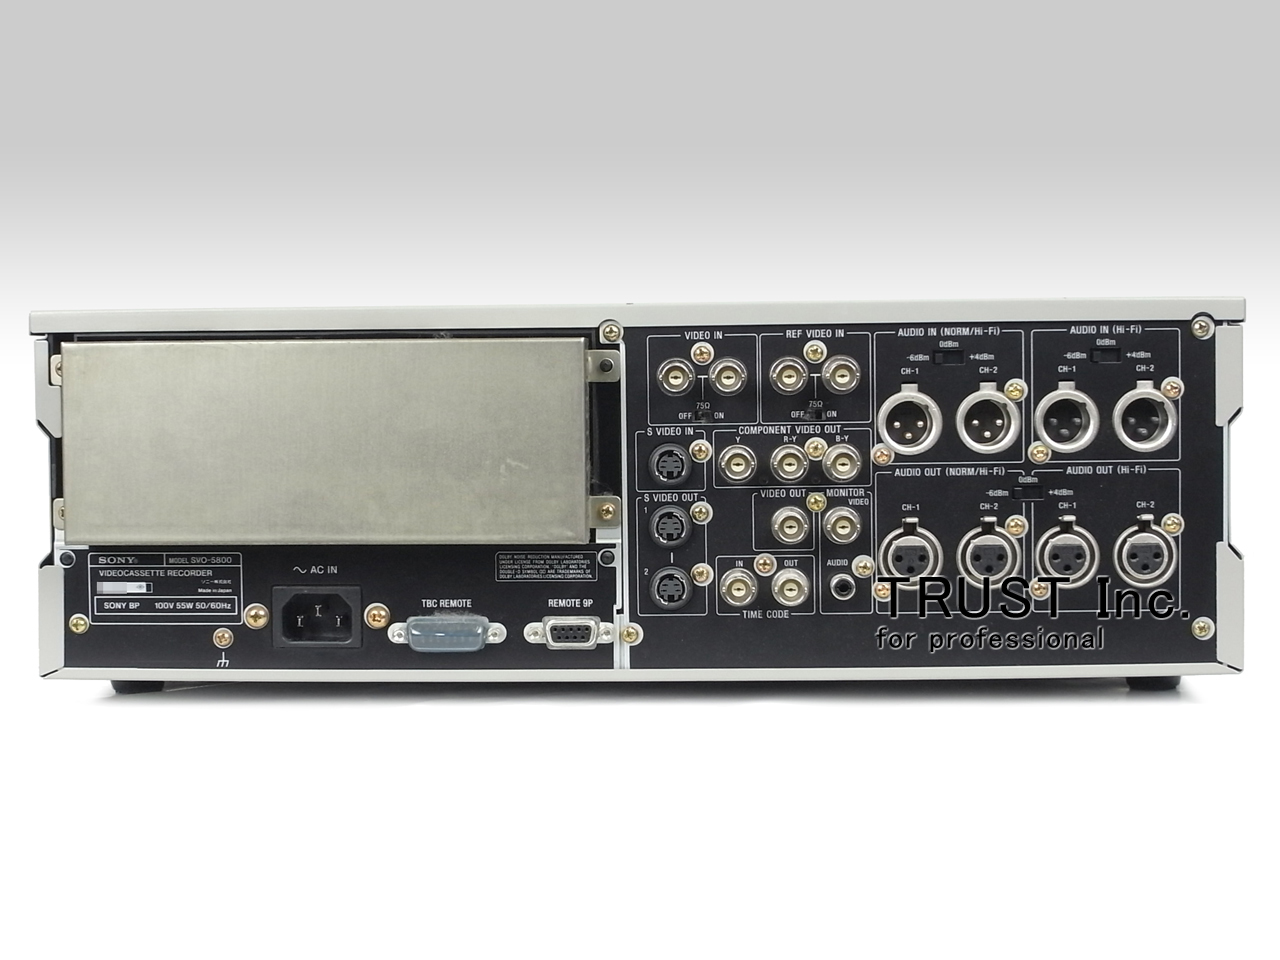 SVO-5800 / S-VHS Recoder【中古放送用・業務用 映像機器・音響機器の